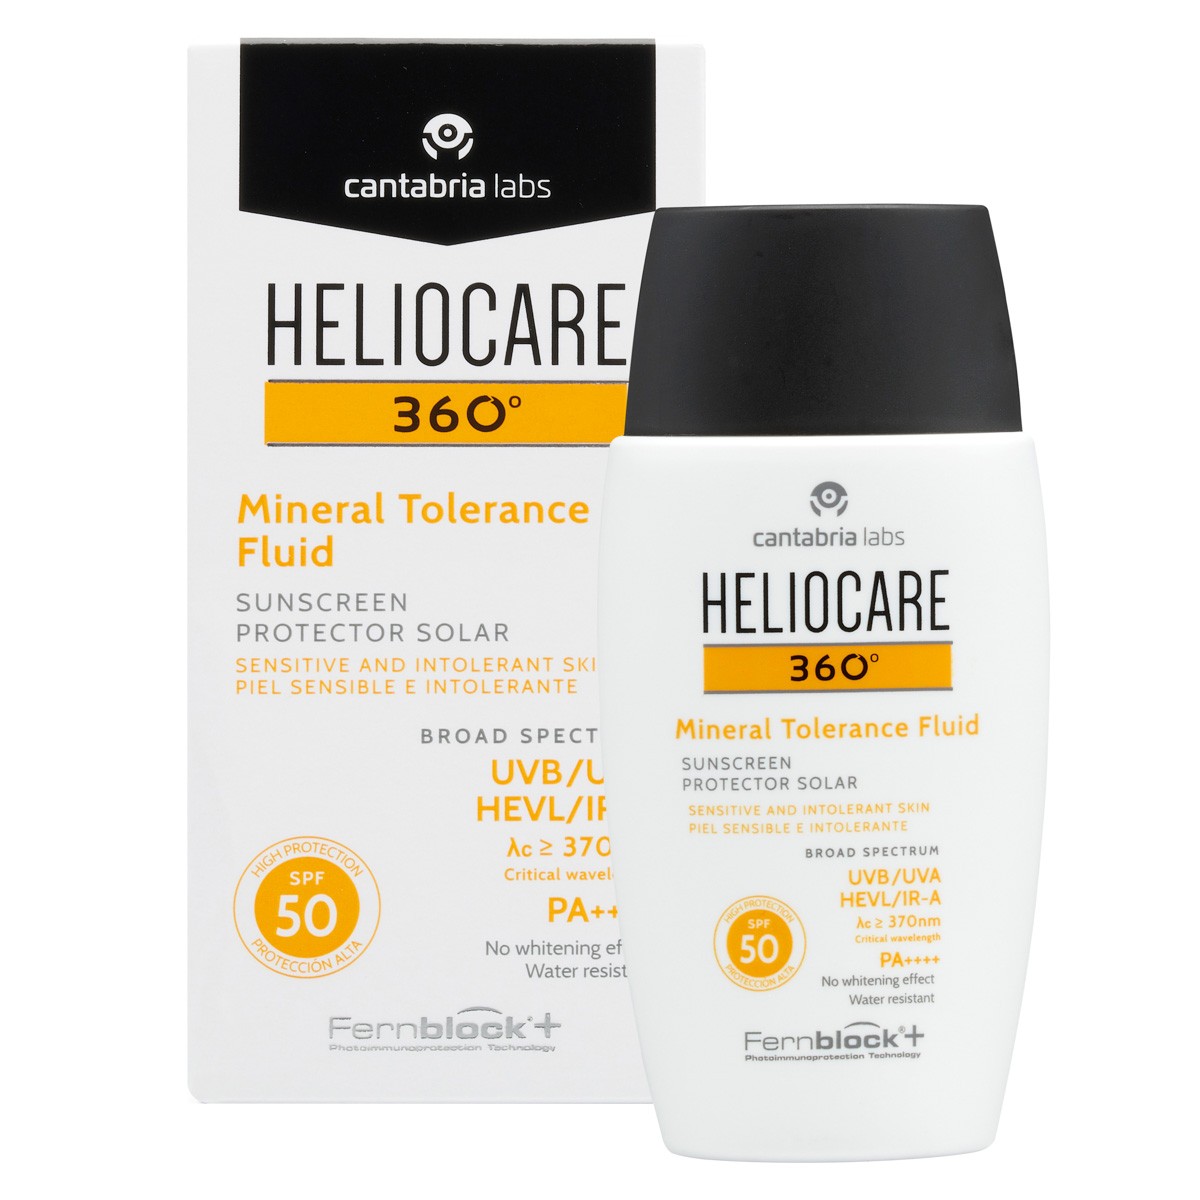 Heliocare 360º mineral toleran fluid 50ml